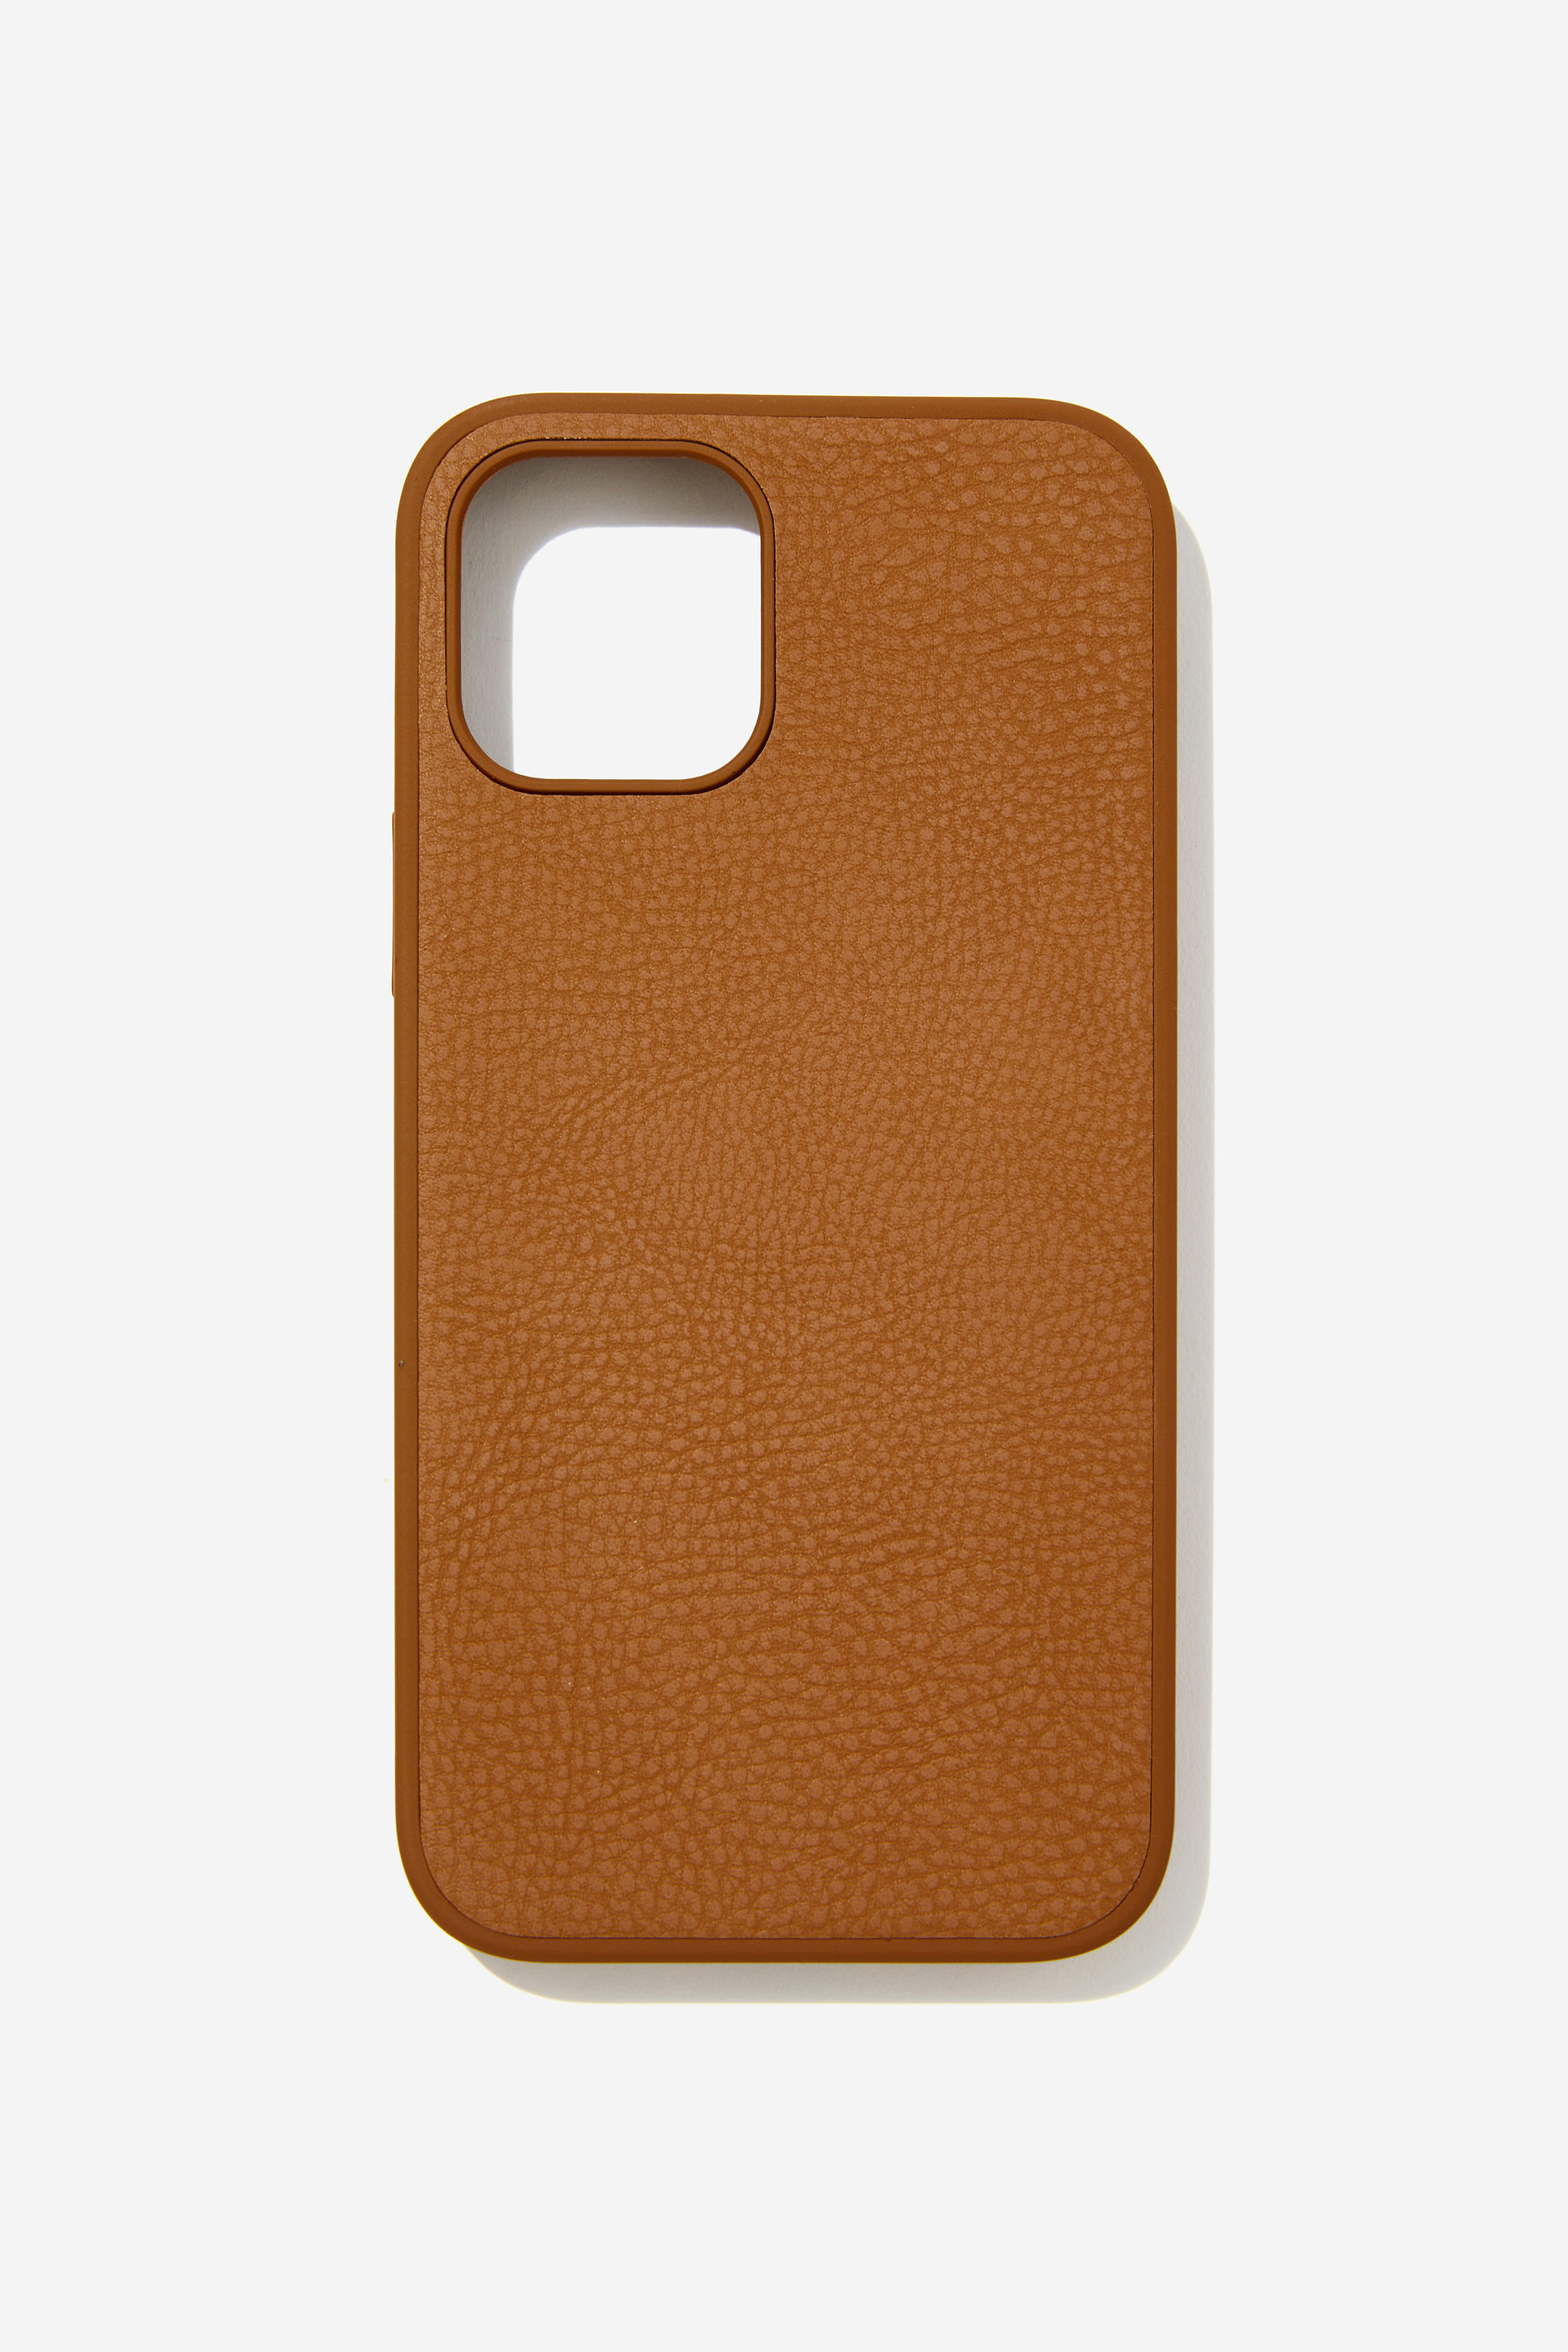 Typo - Buffalo Phone Case Iphone 12 12 Pro - Tan